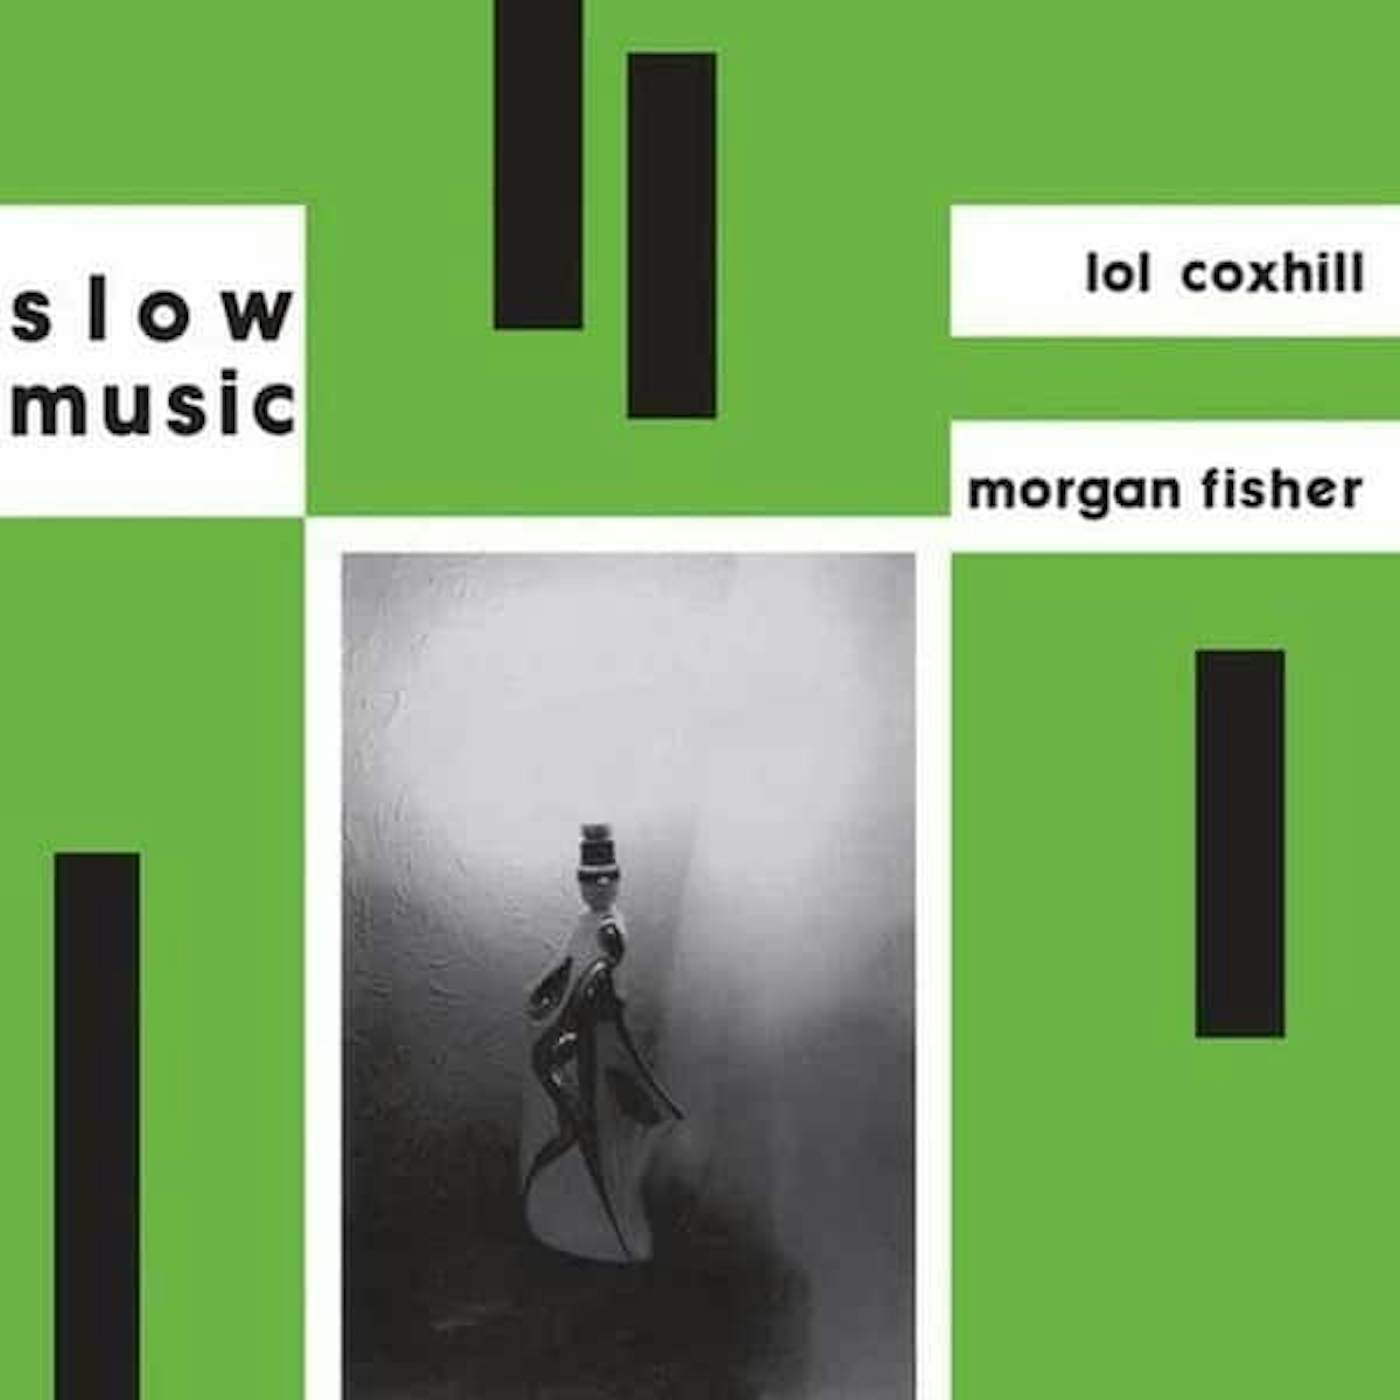 Lol Coxhill - Morgan Fisher Slow Music Vinyl Record